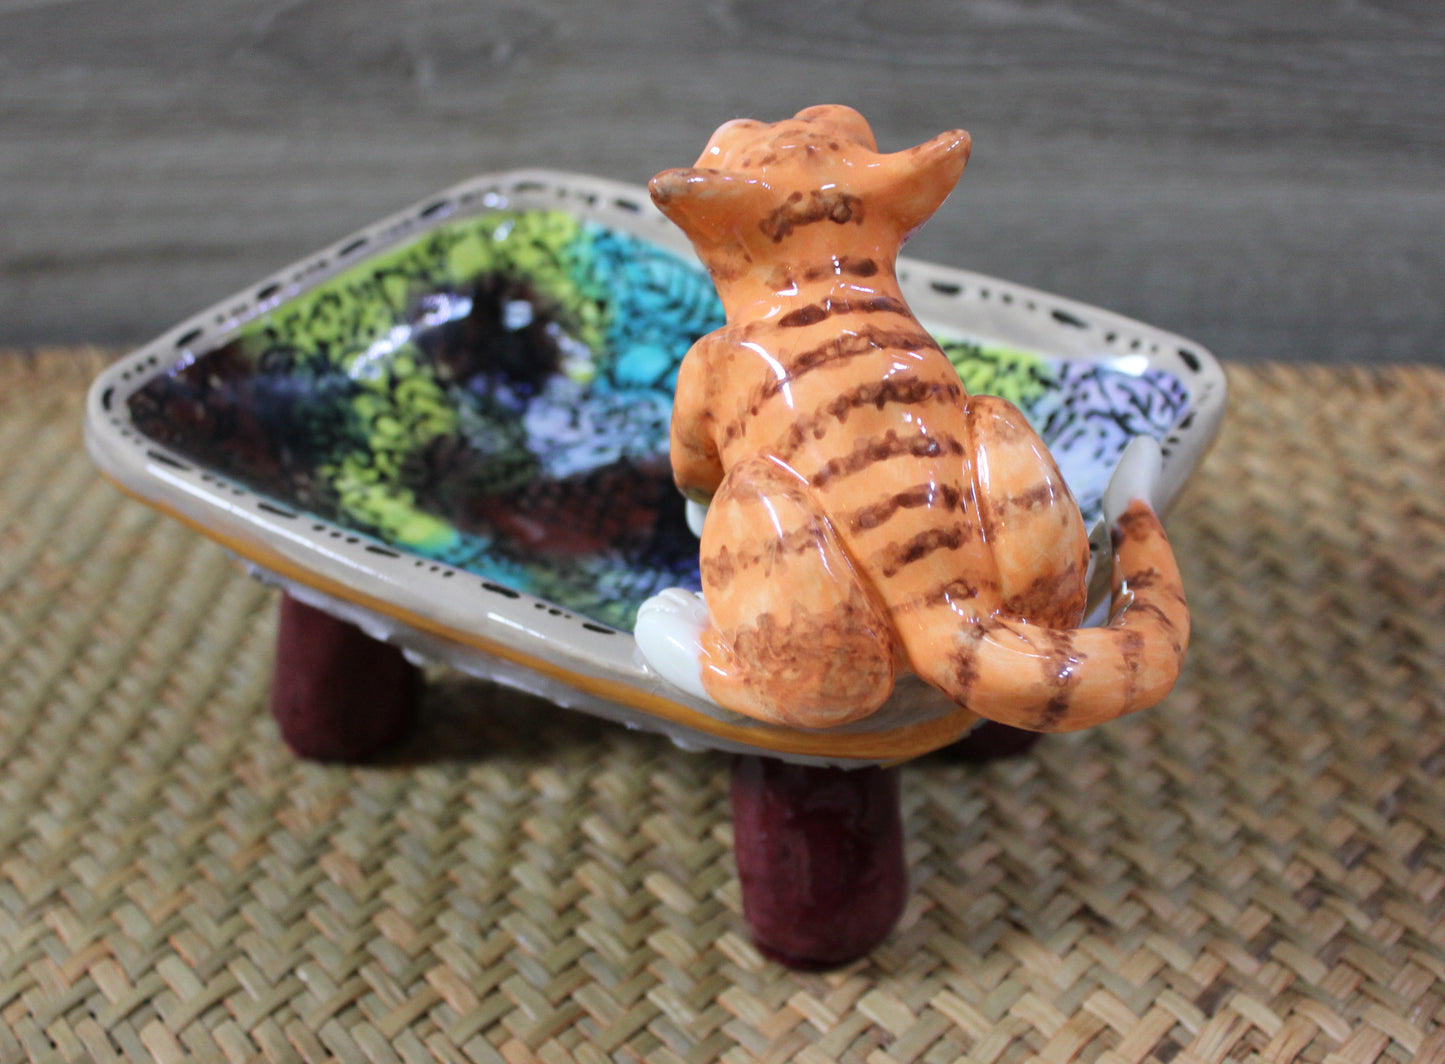 Artistic, Decorative, Ceramic Tabletop Bowl with Cat Sculpture